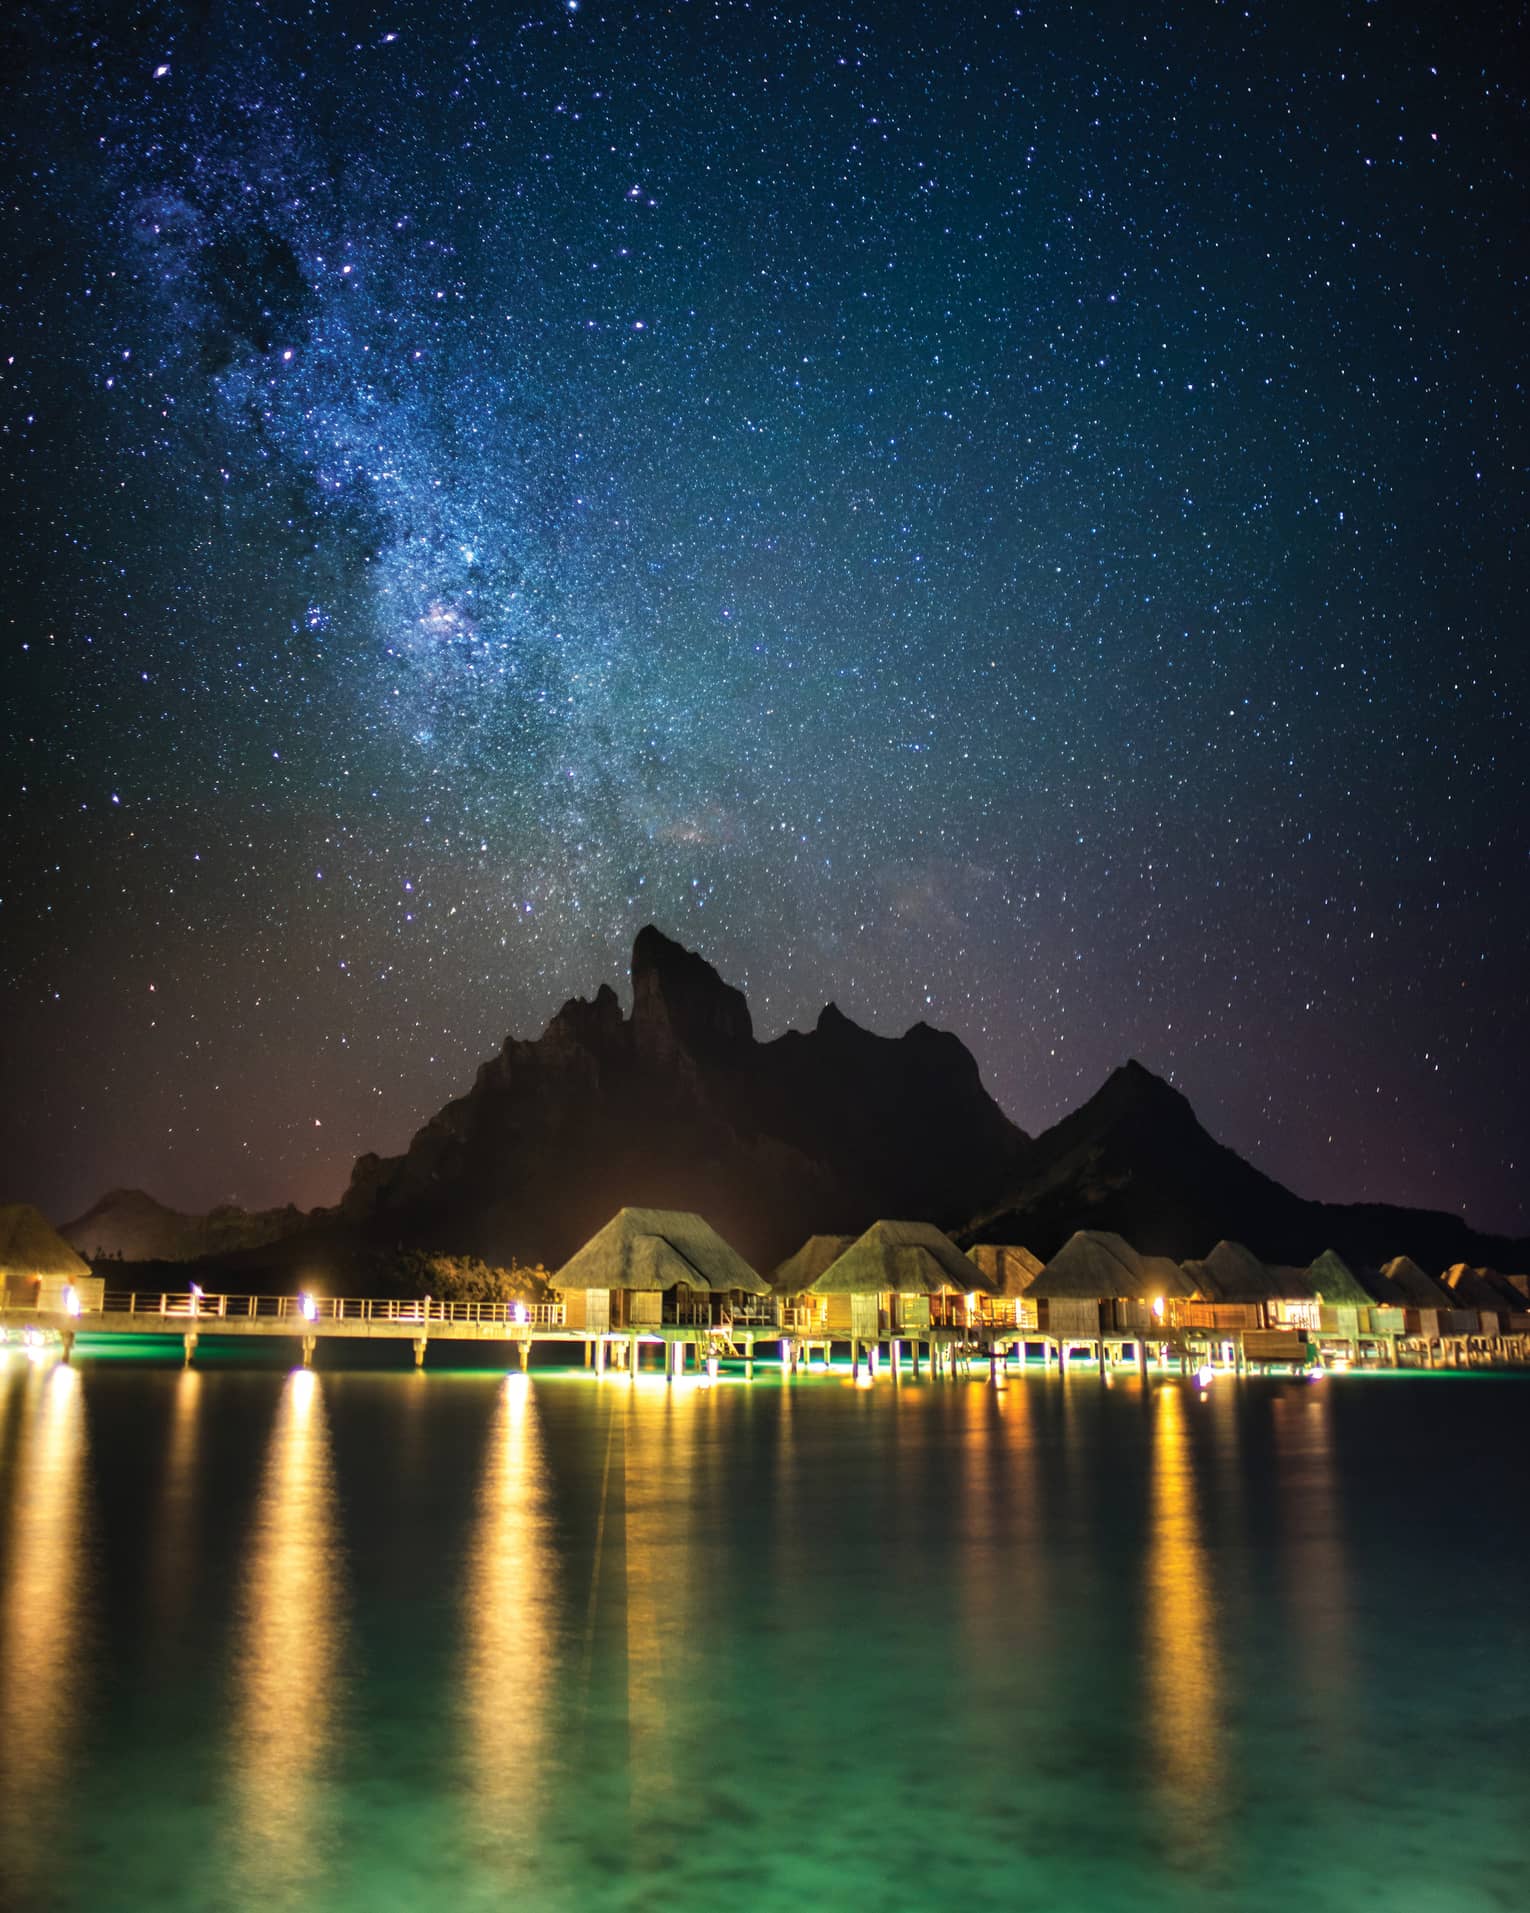 Illuminated Four Seasons Resort Bora Bora beneath a blanket of stars at night